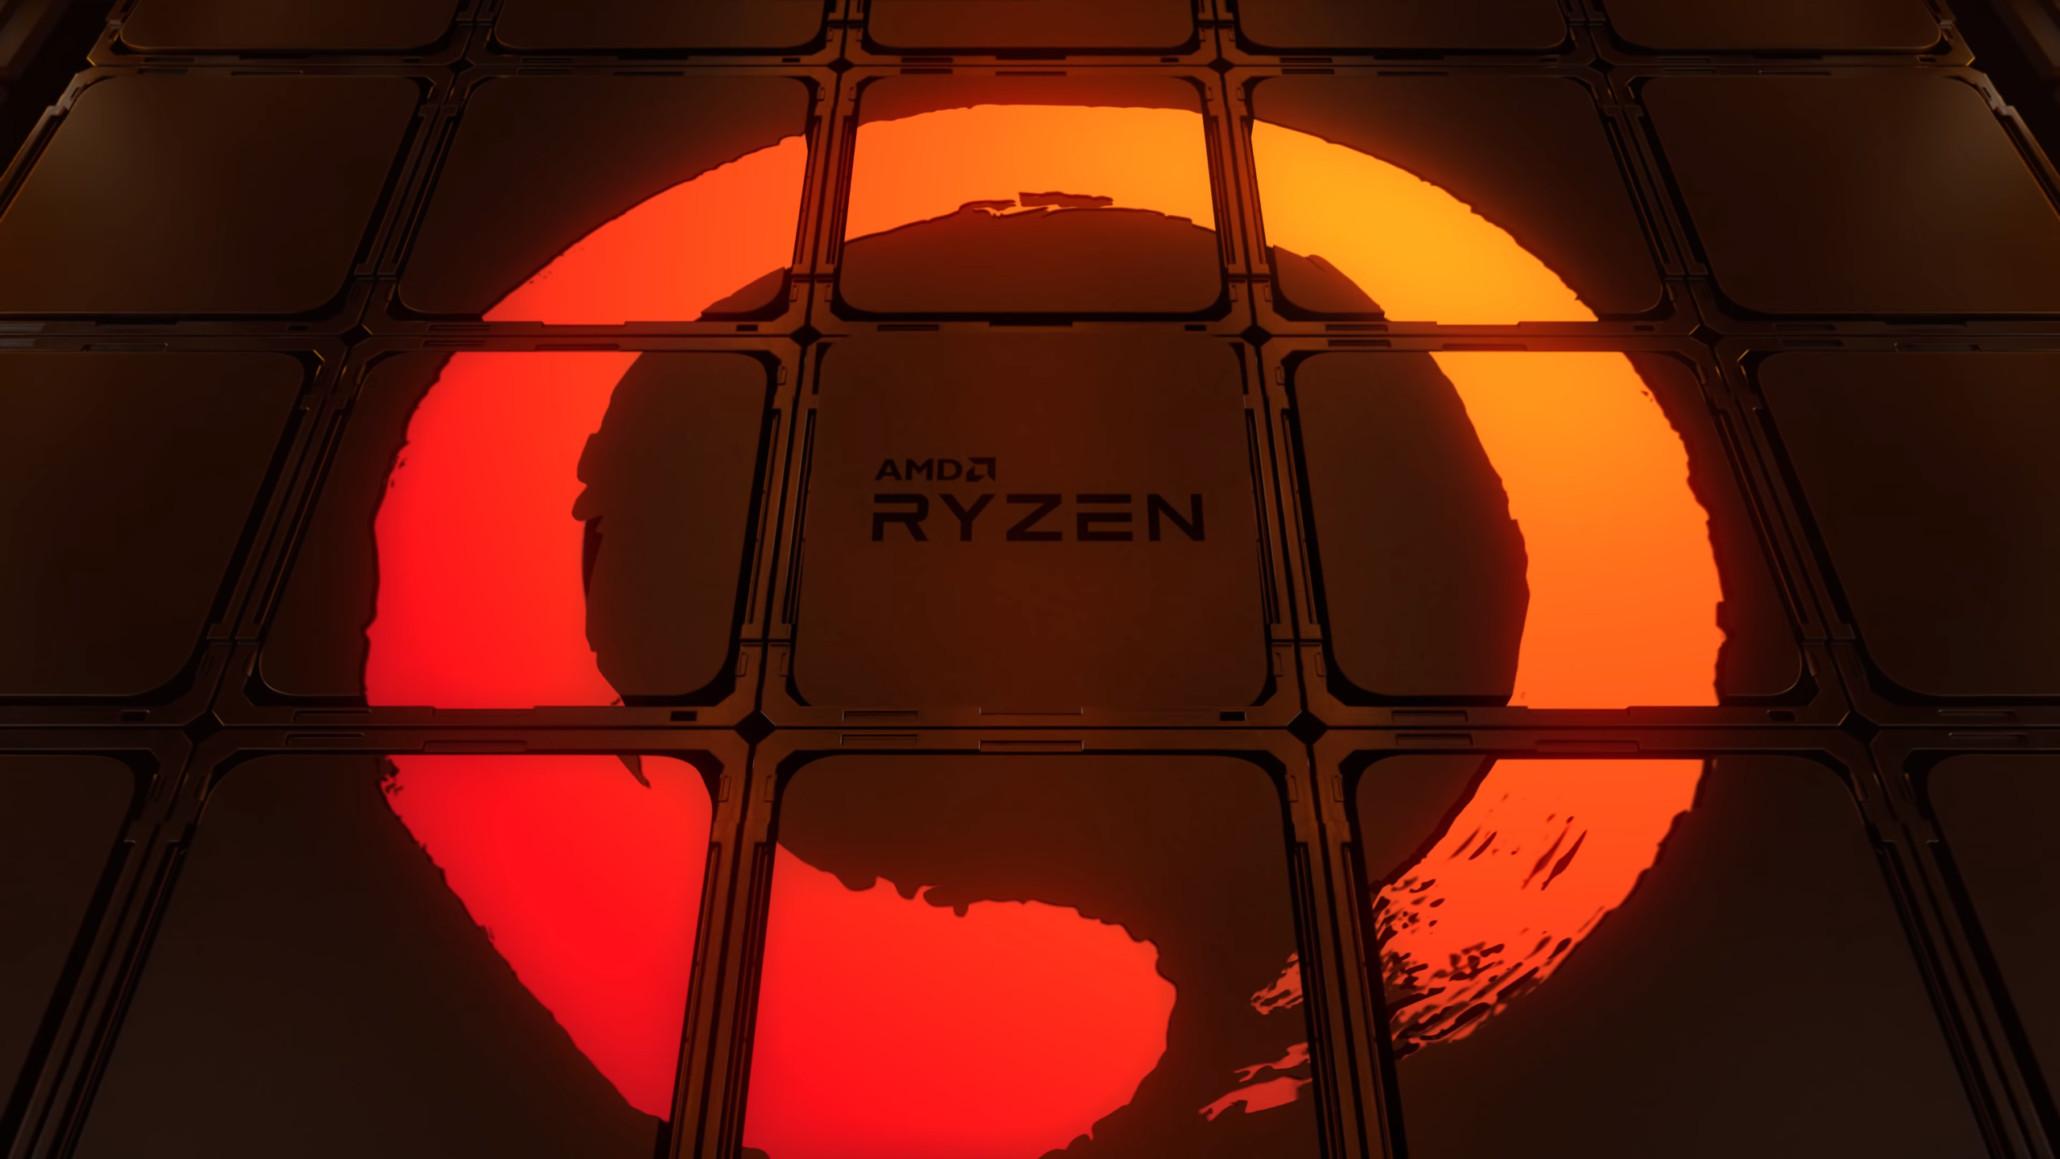 More information about "Οι Ryzen ξεπερνούν σε πωλήσεις τους επεξεργαστές της Intel στις Ασιατικές αγορές"